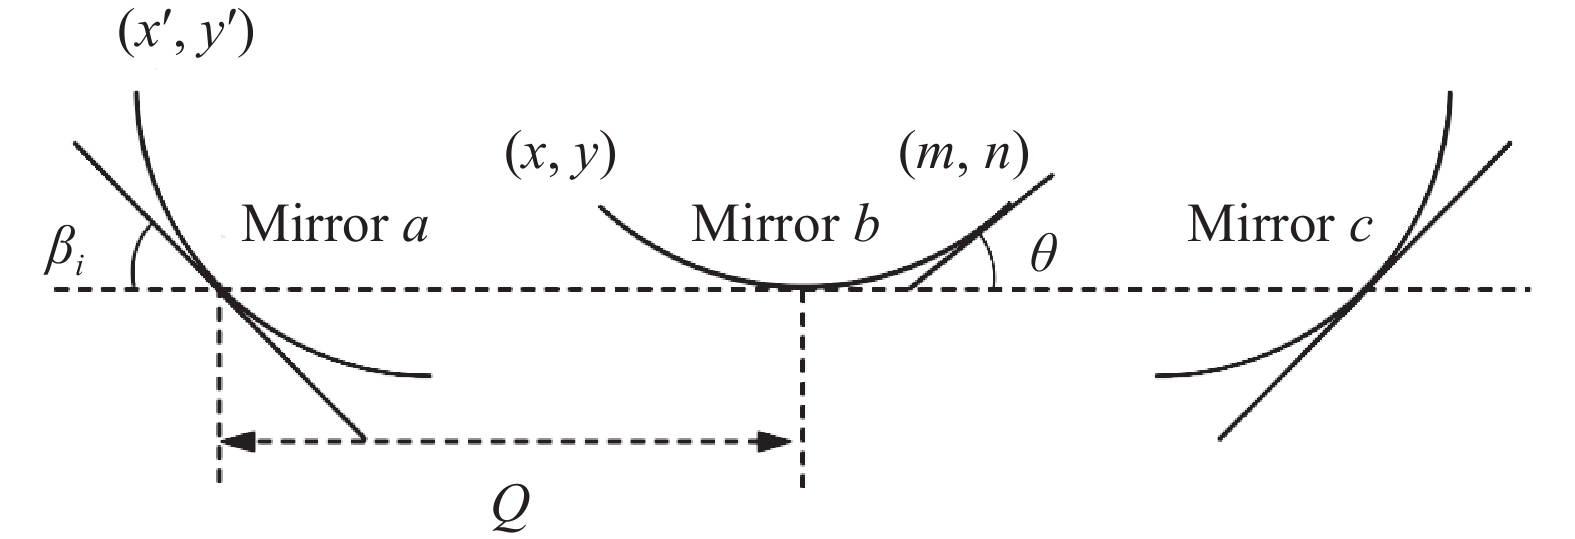 Schematic diagram of mirror transformation